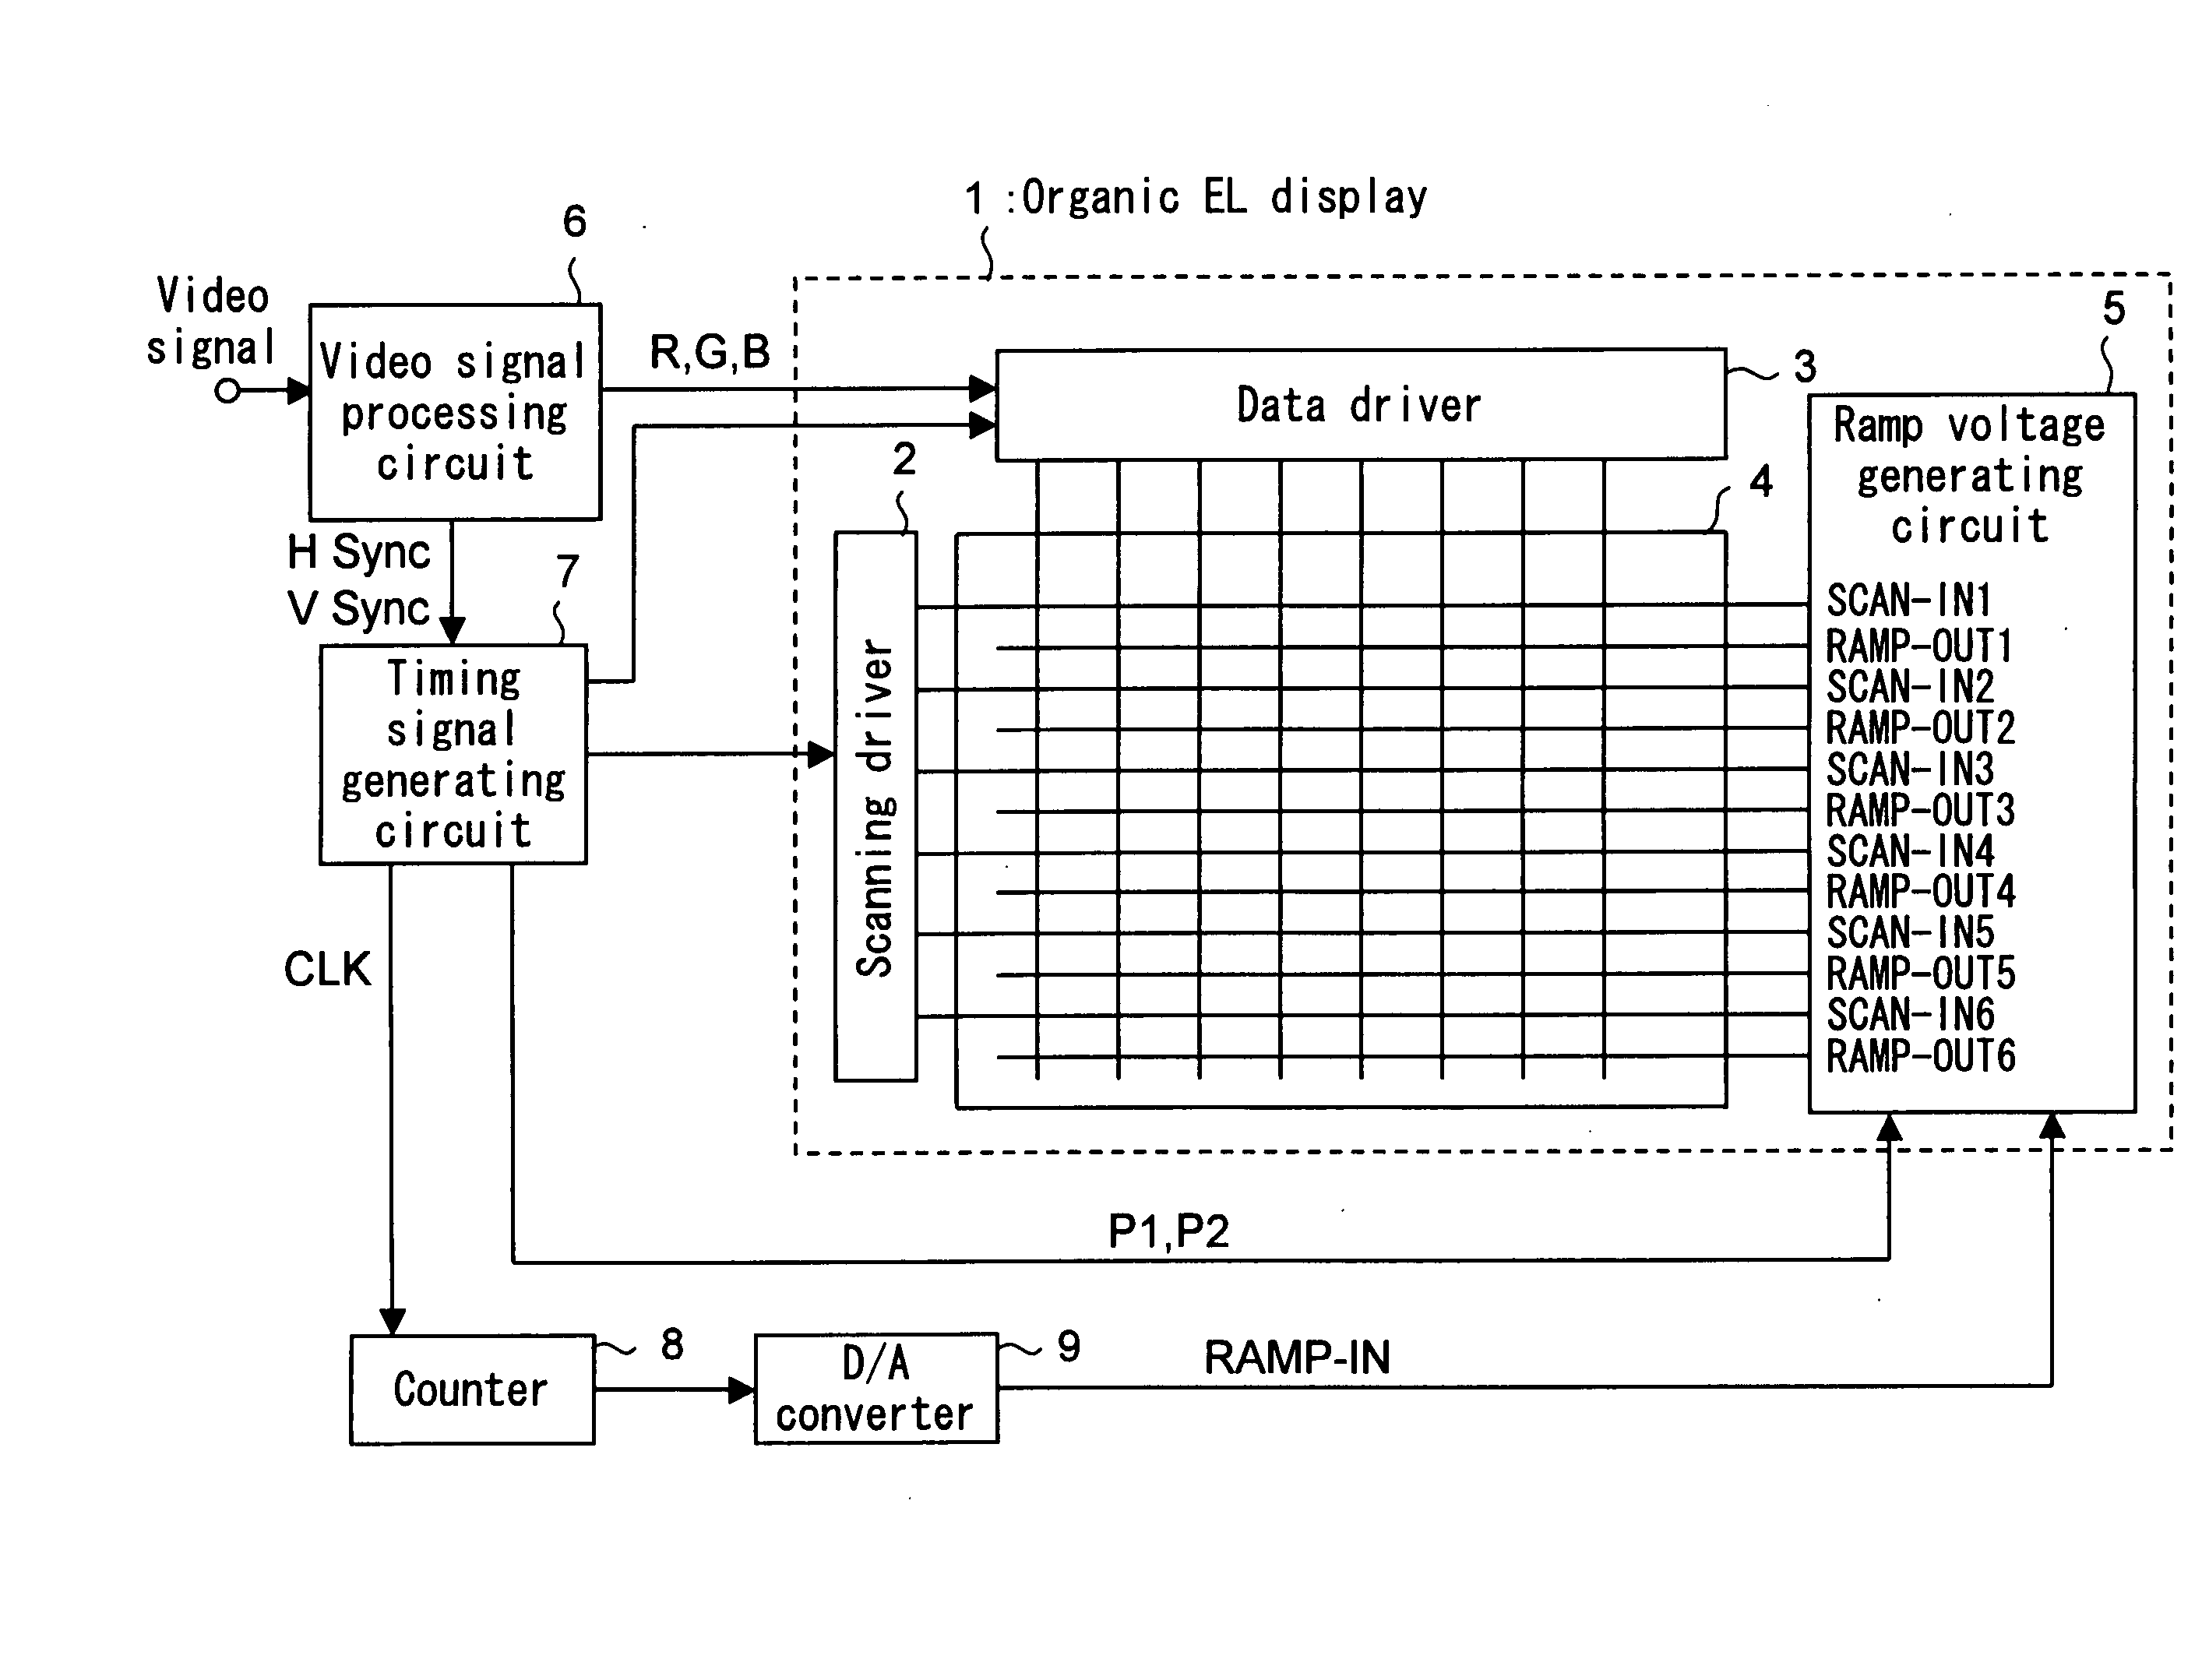 Ramp voltage generating apparatus and active matrix drive-type display apparatus